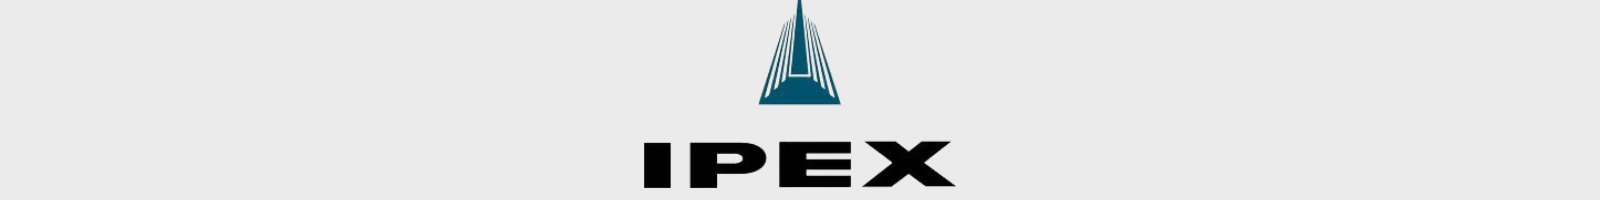 
logo ipex